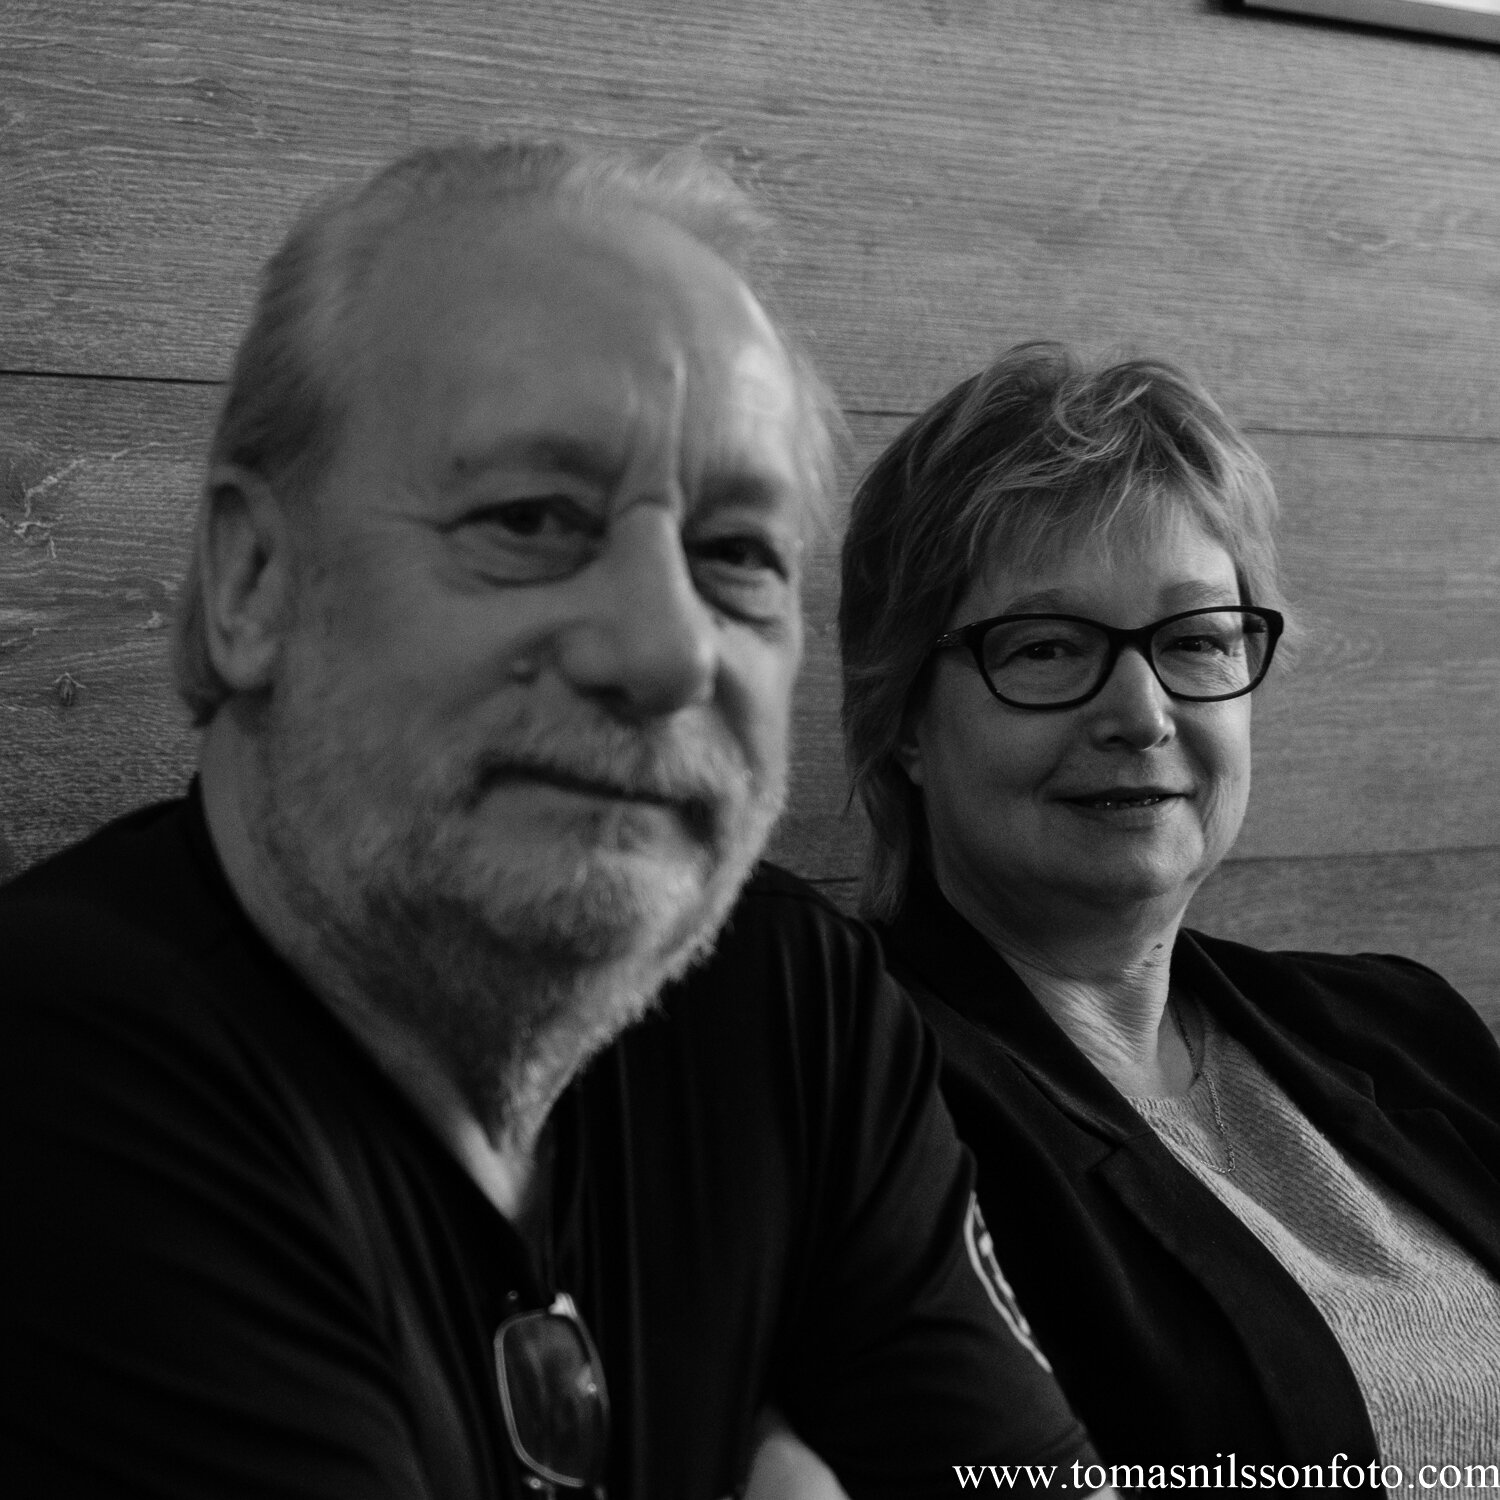 Day 26 - January 26: Bengt & Susanne